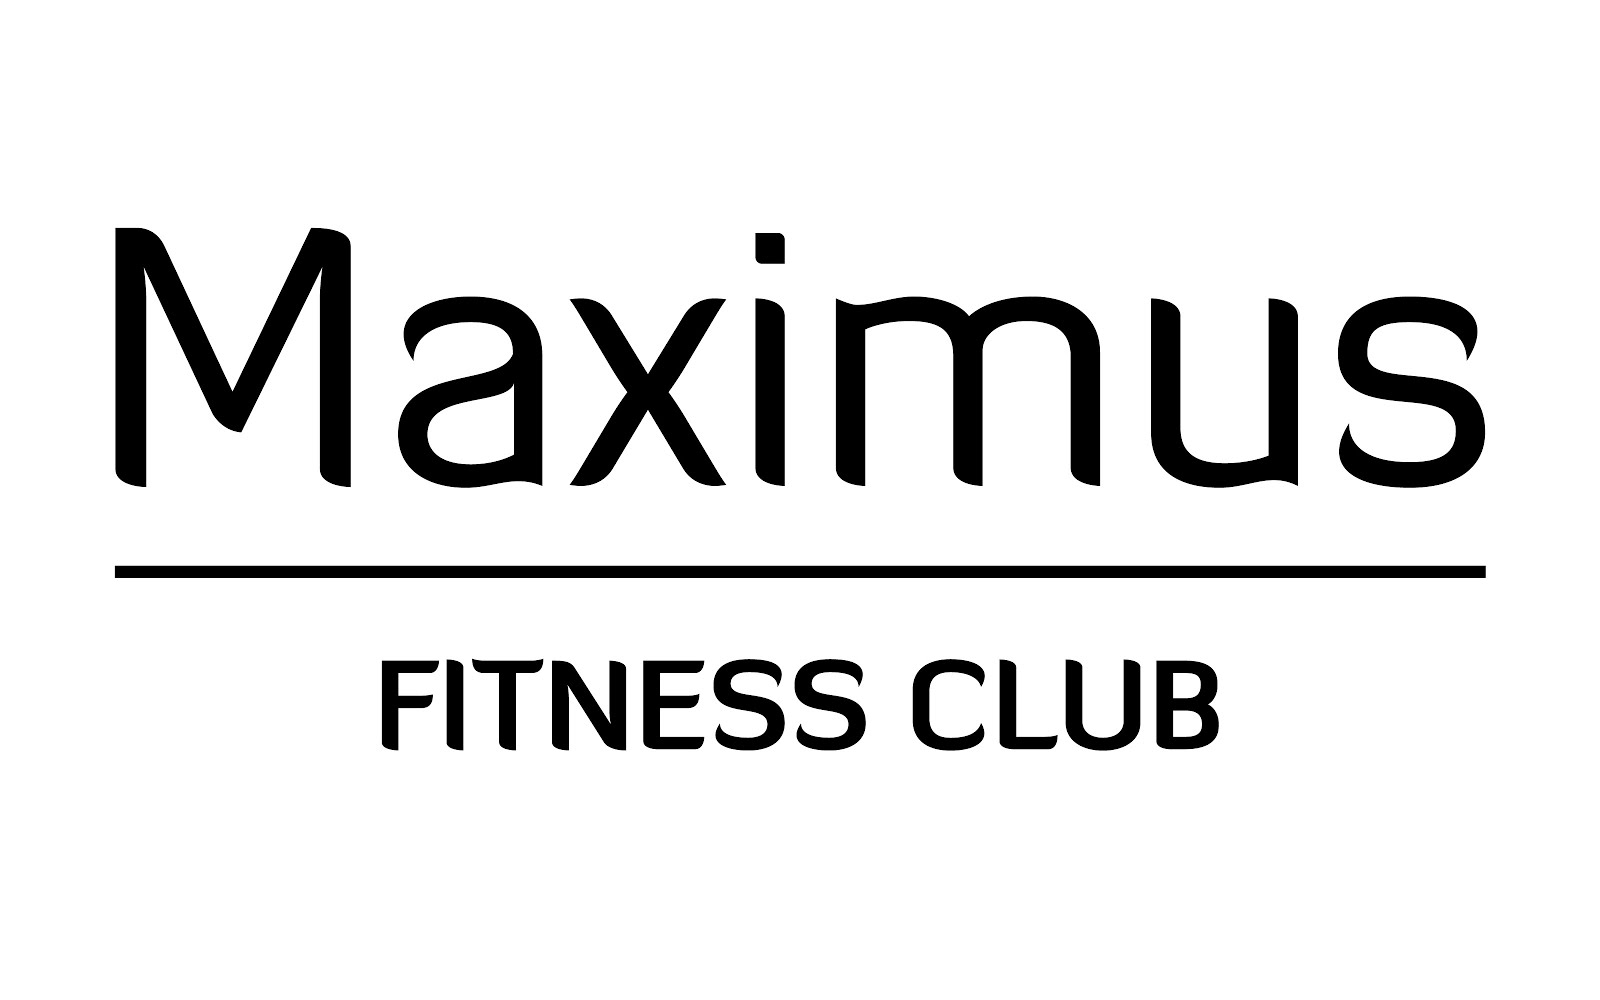 Maximus Fitness Club